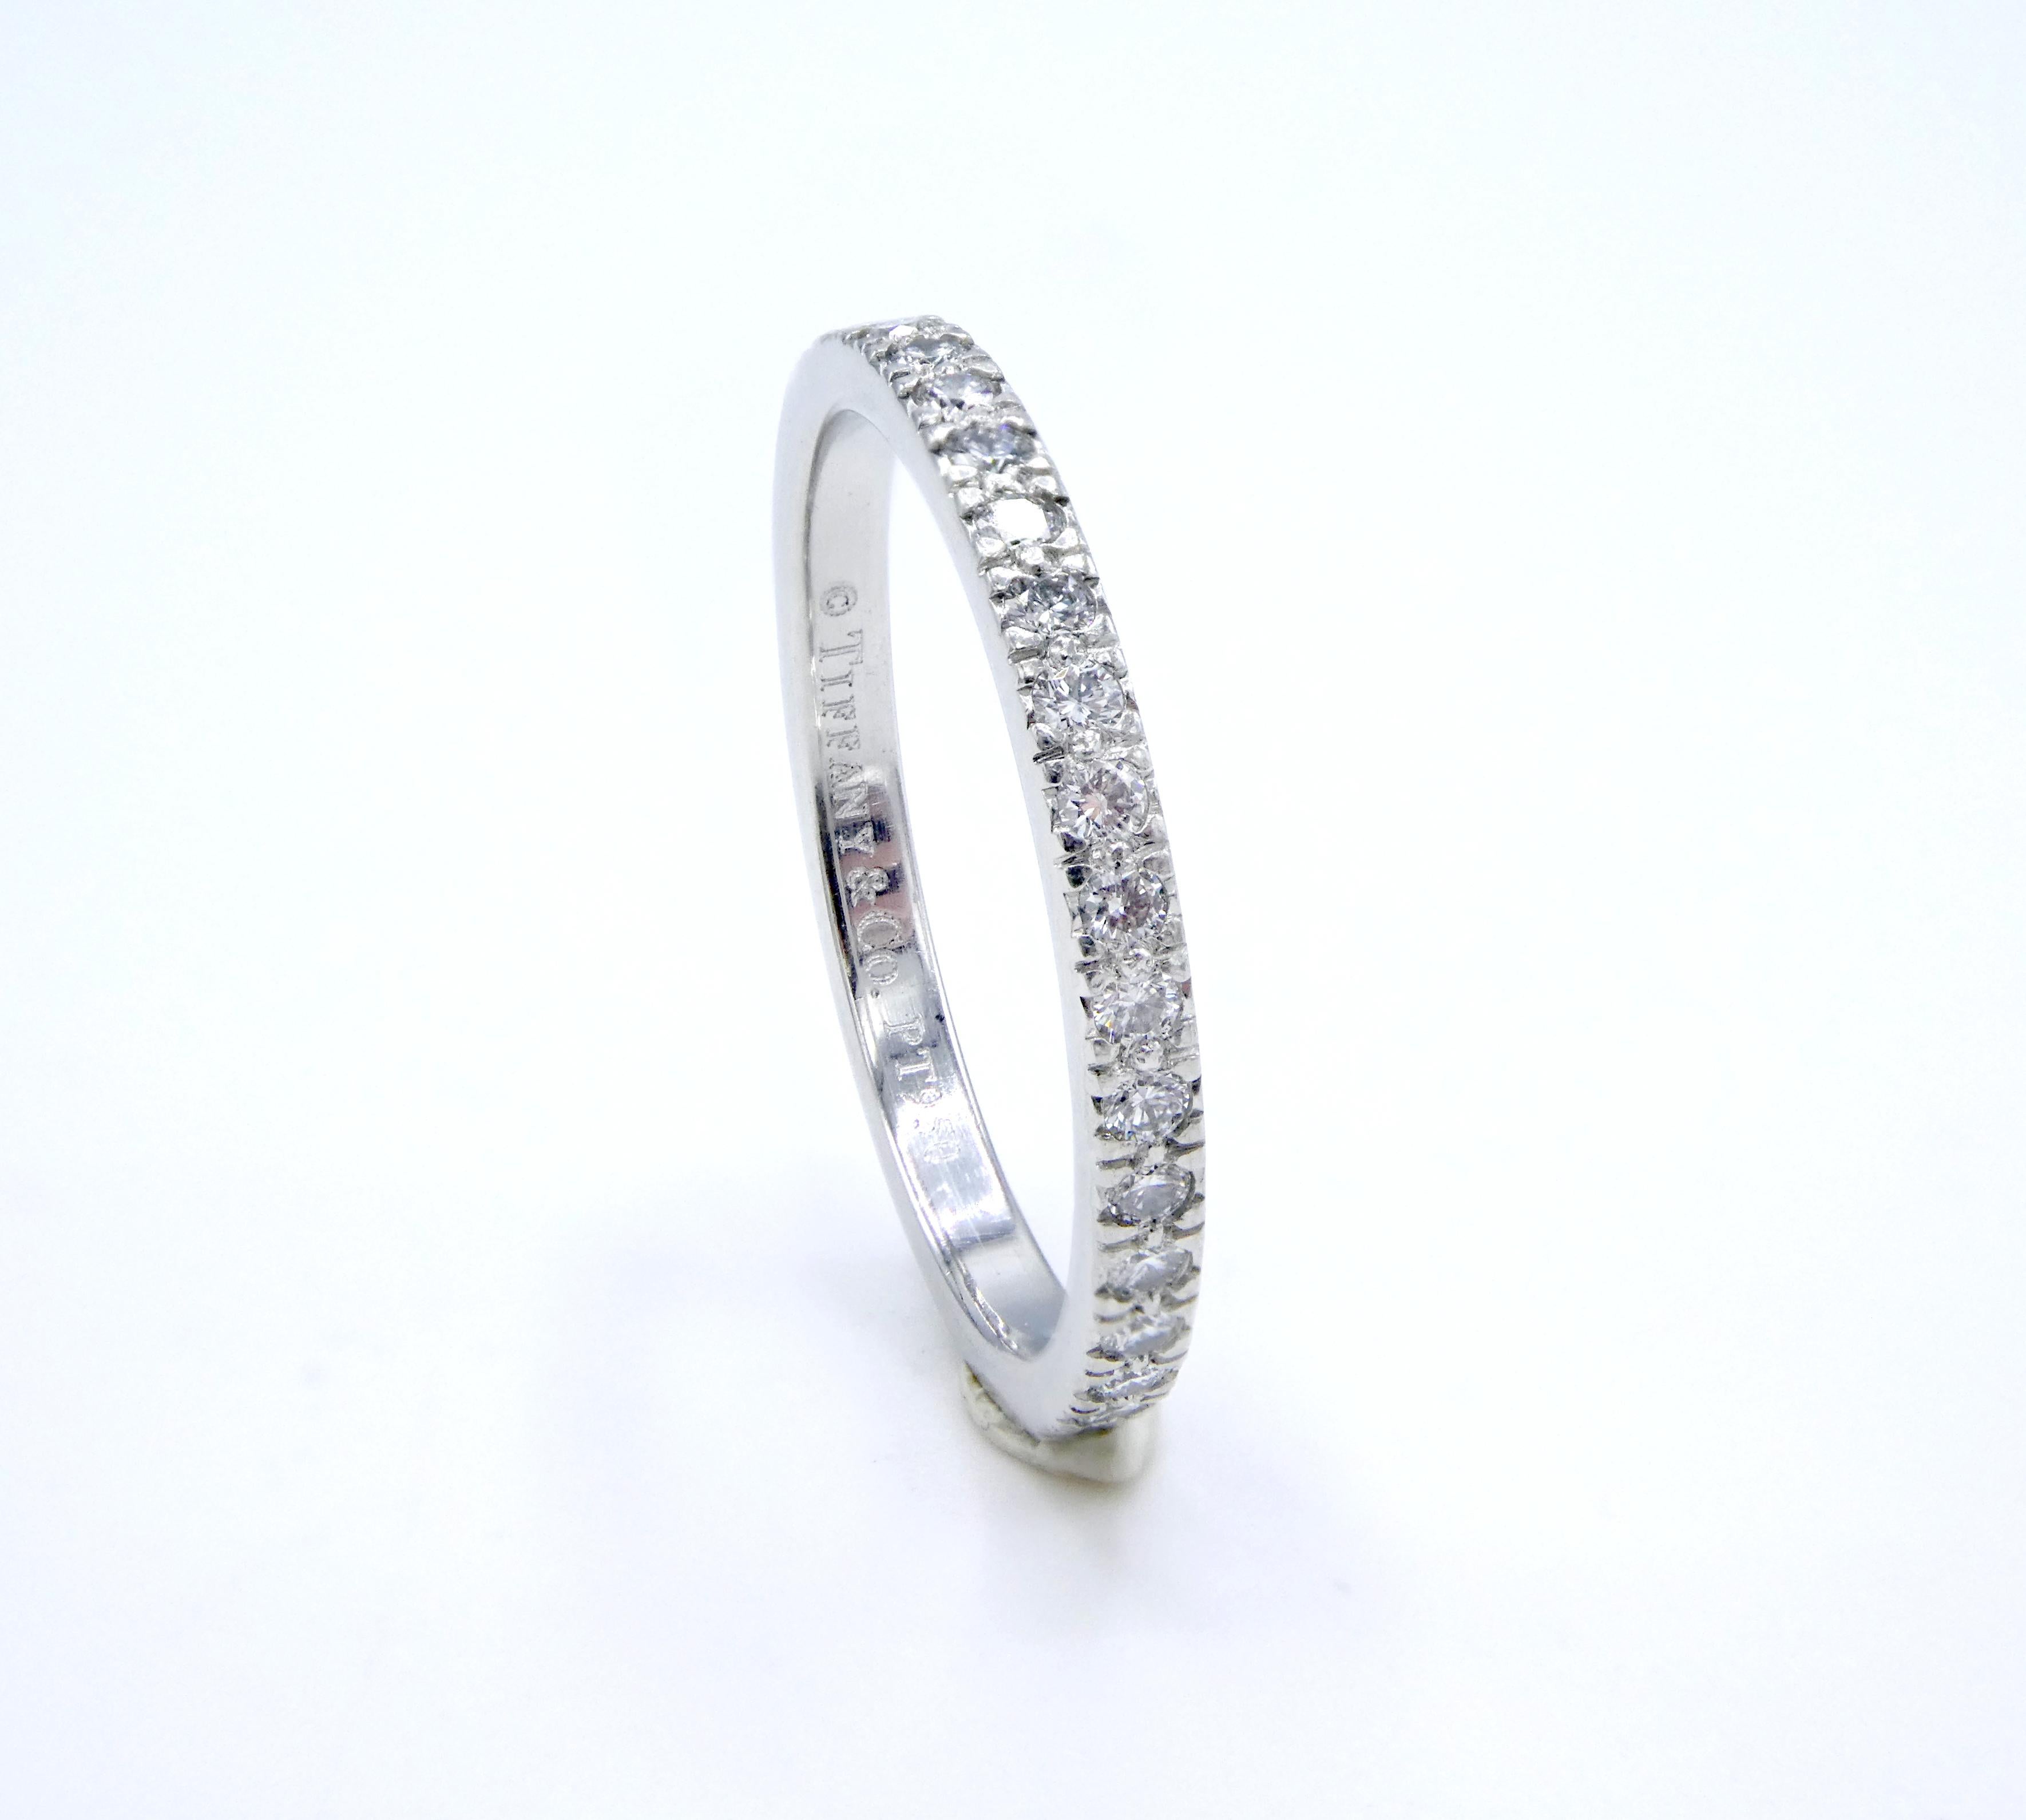 Tiffany & Co. Soleste® Platinum Carat Round Diamond Eternity Band Wedding Ring

Metal: Platinum
Weight: 2.48 grams
Diamonds: 36 round diamonds Approx. 0.34 CTW F-G VS
Size: 6 (US)
Width: 1.90mm
Signed: 